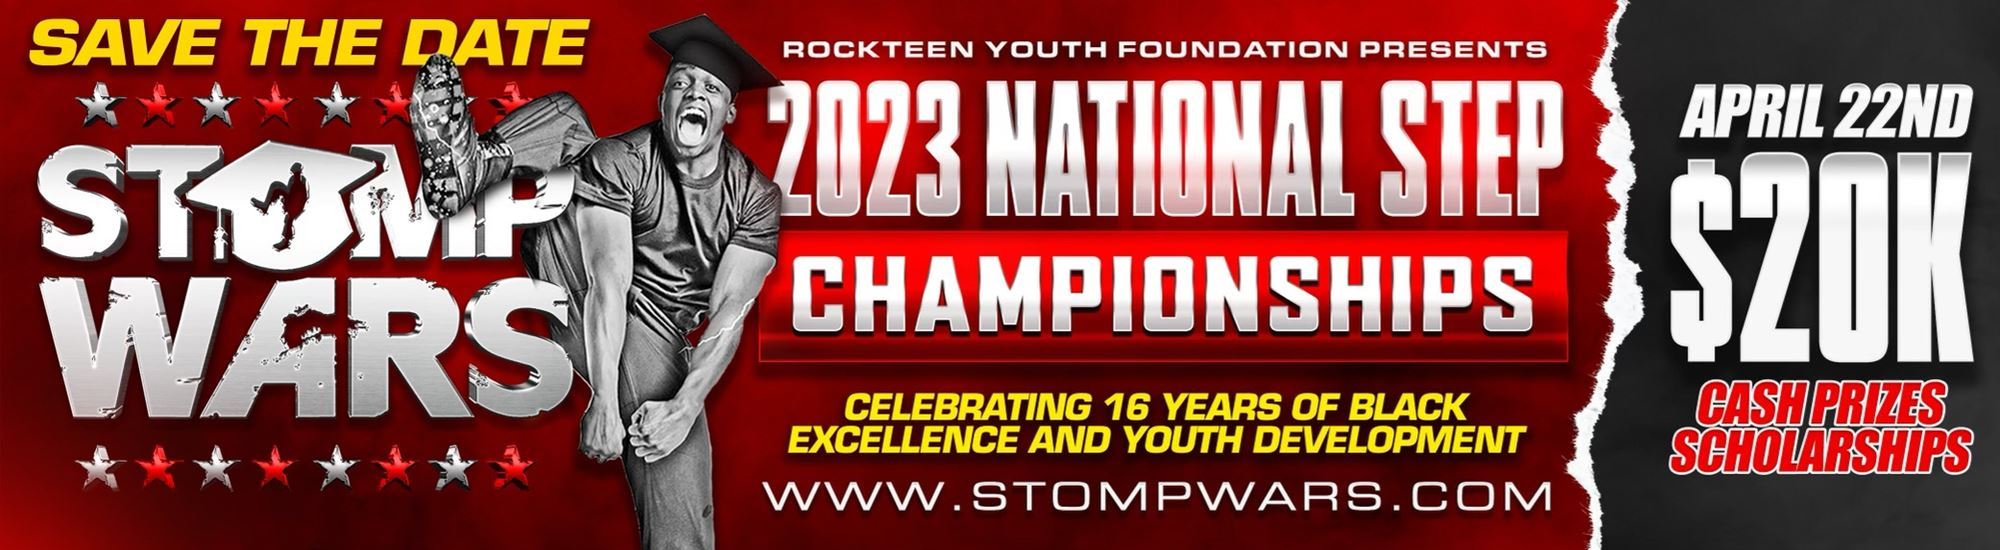 Stomp Wars 2023 National Step Championships